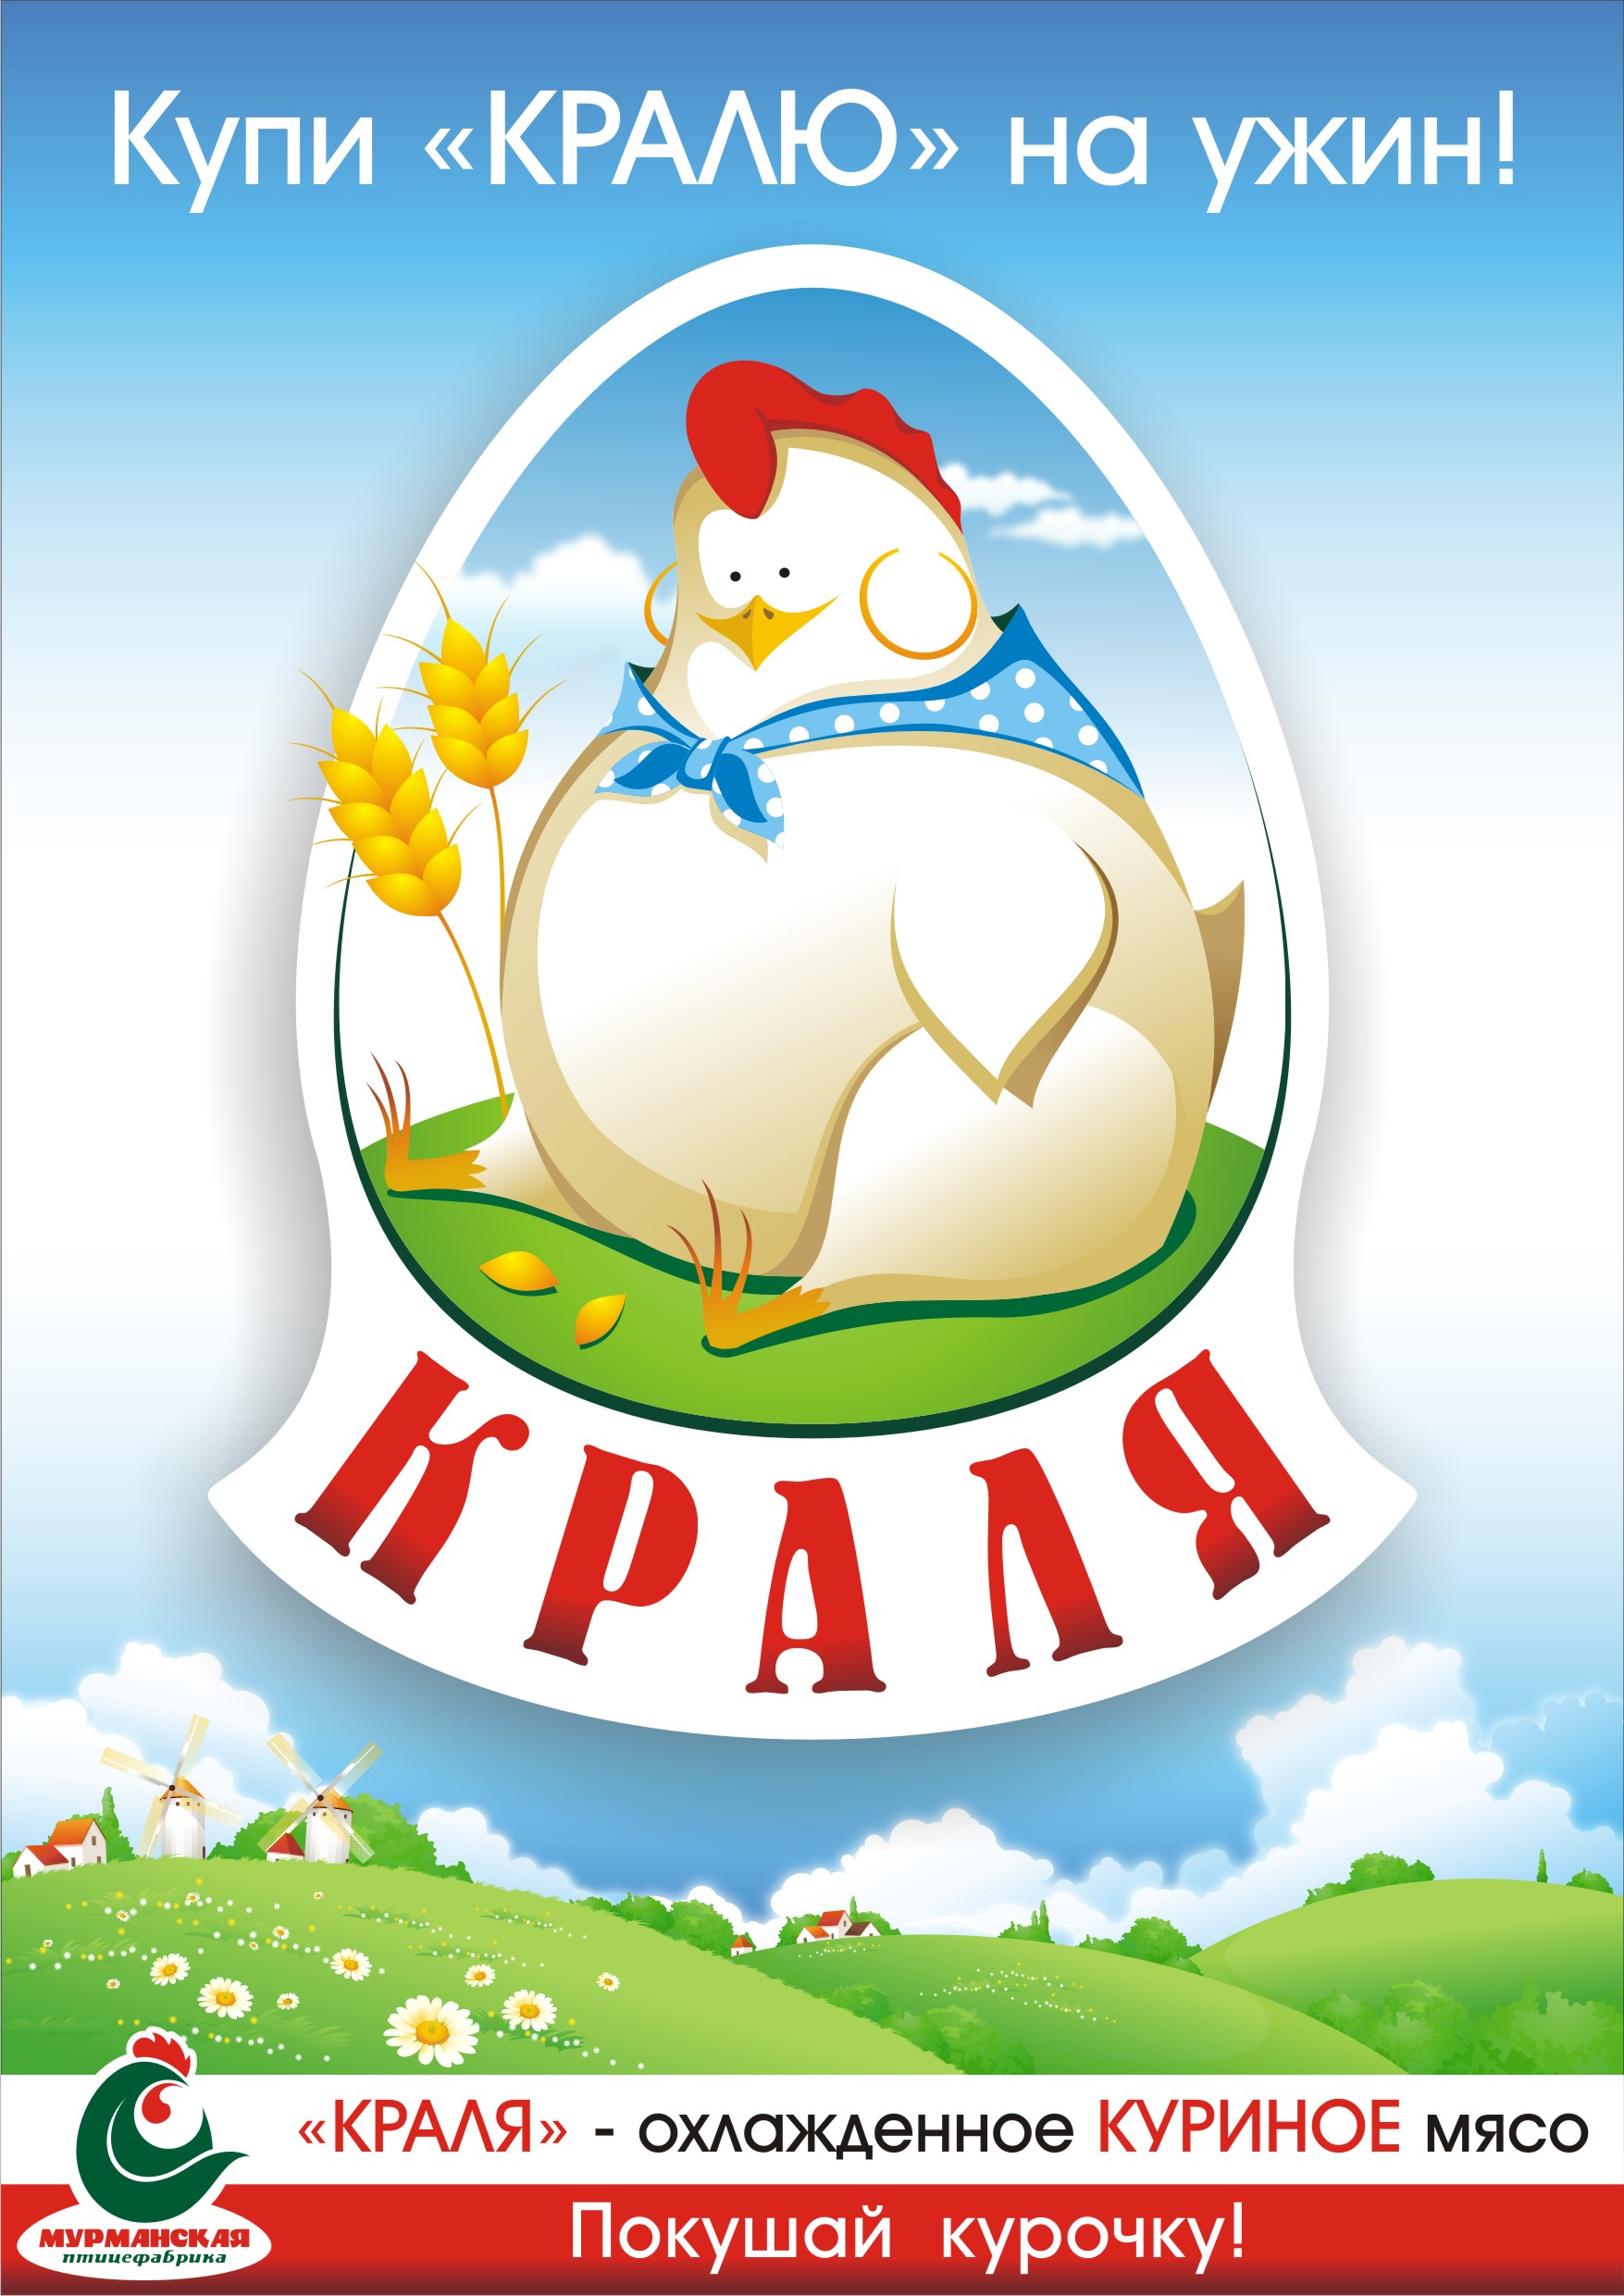 Что значит крали. Краля. Краля курица. Курица логотип. Эмблемы куриное яйцо.